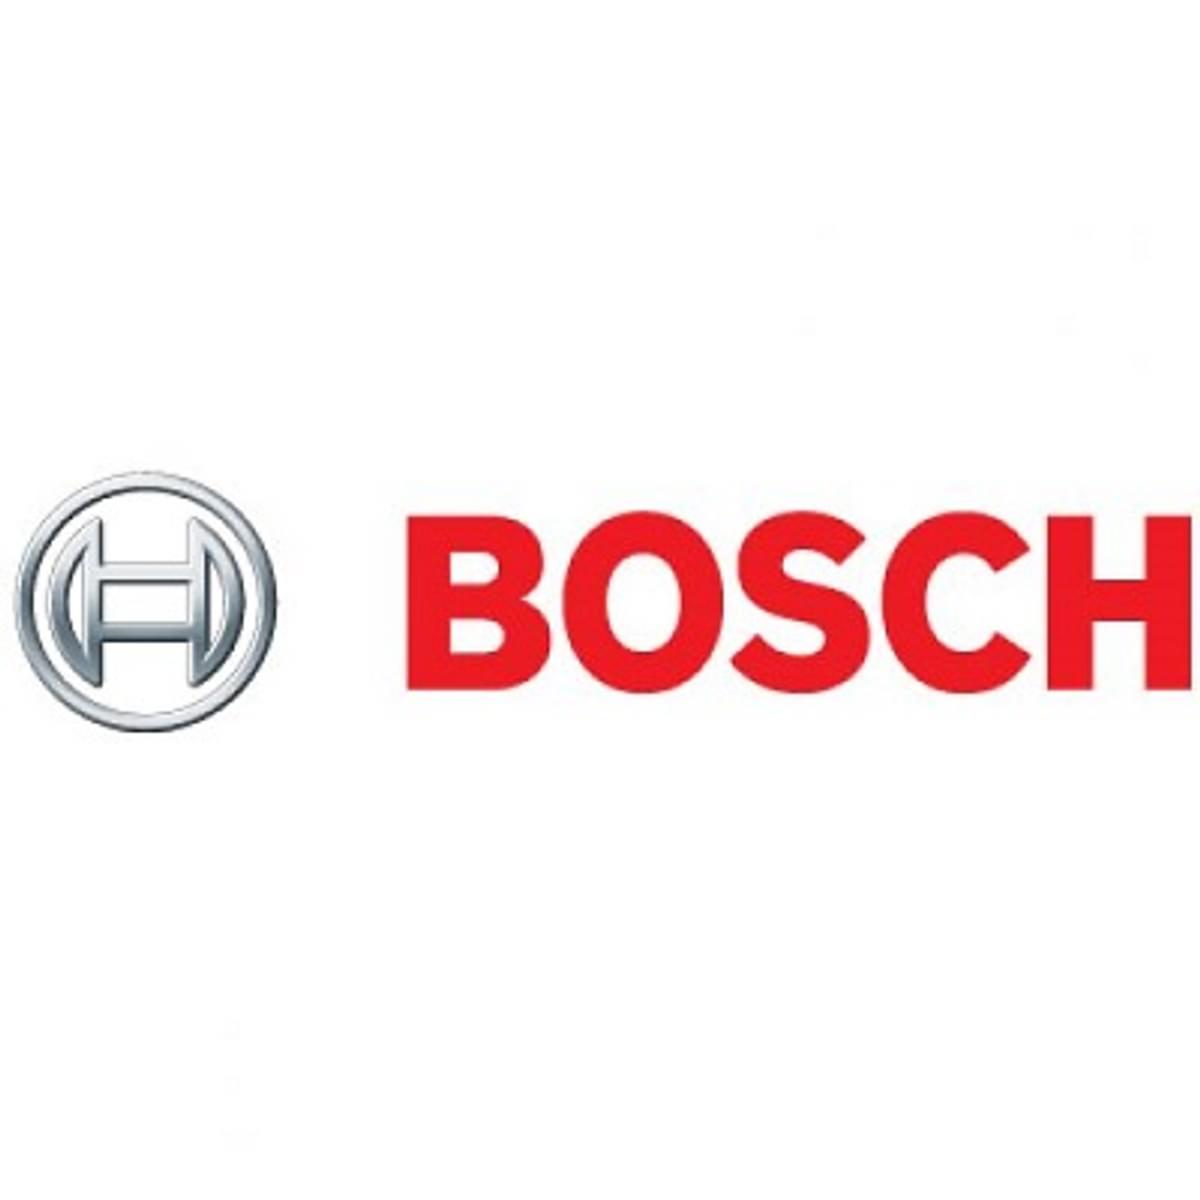 Bosch koopt B2B carpool service image